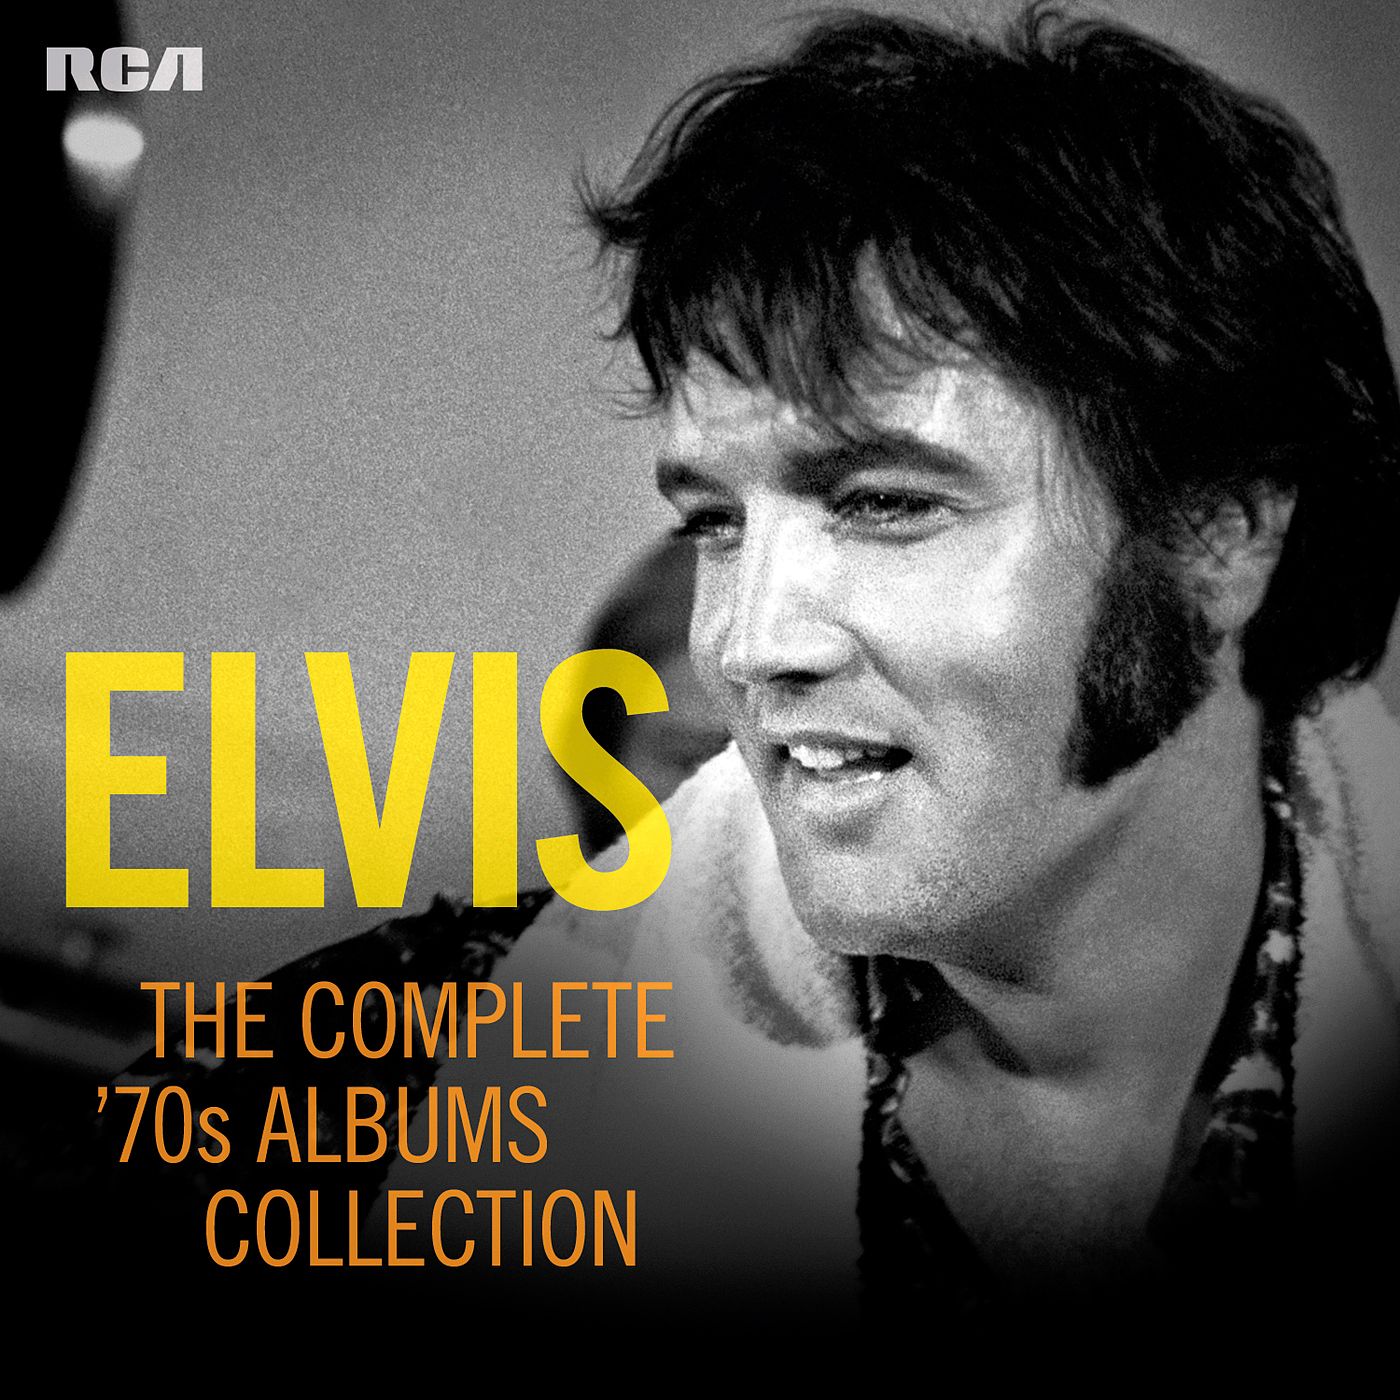 ElvisToday.com - Elvis Presley – The Complete '70s Albums